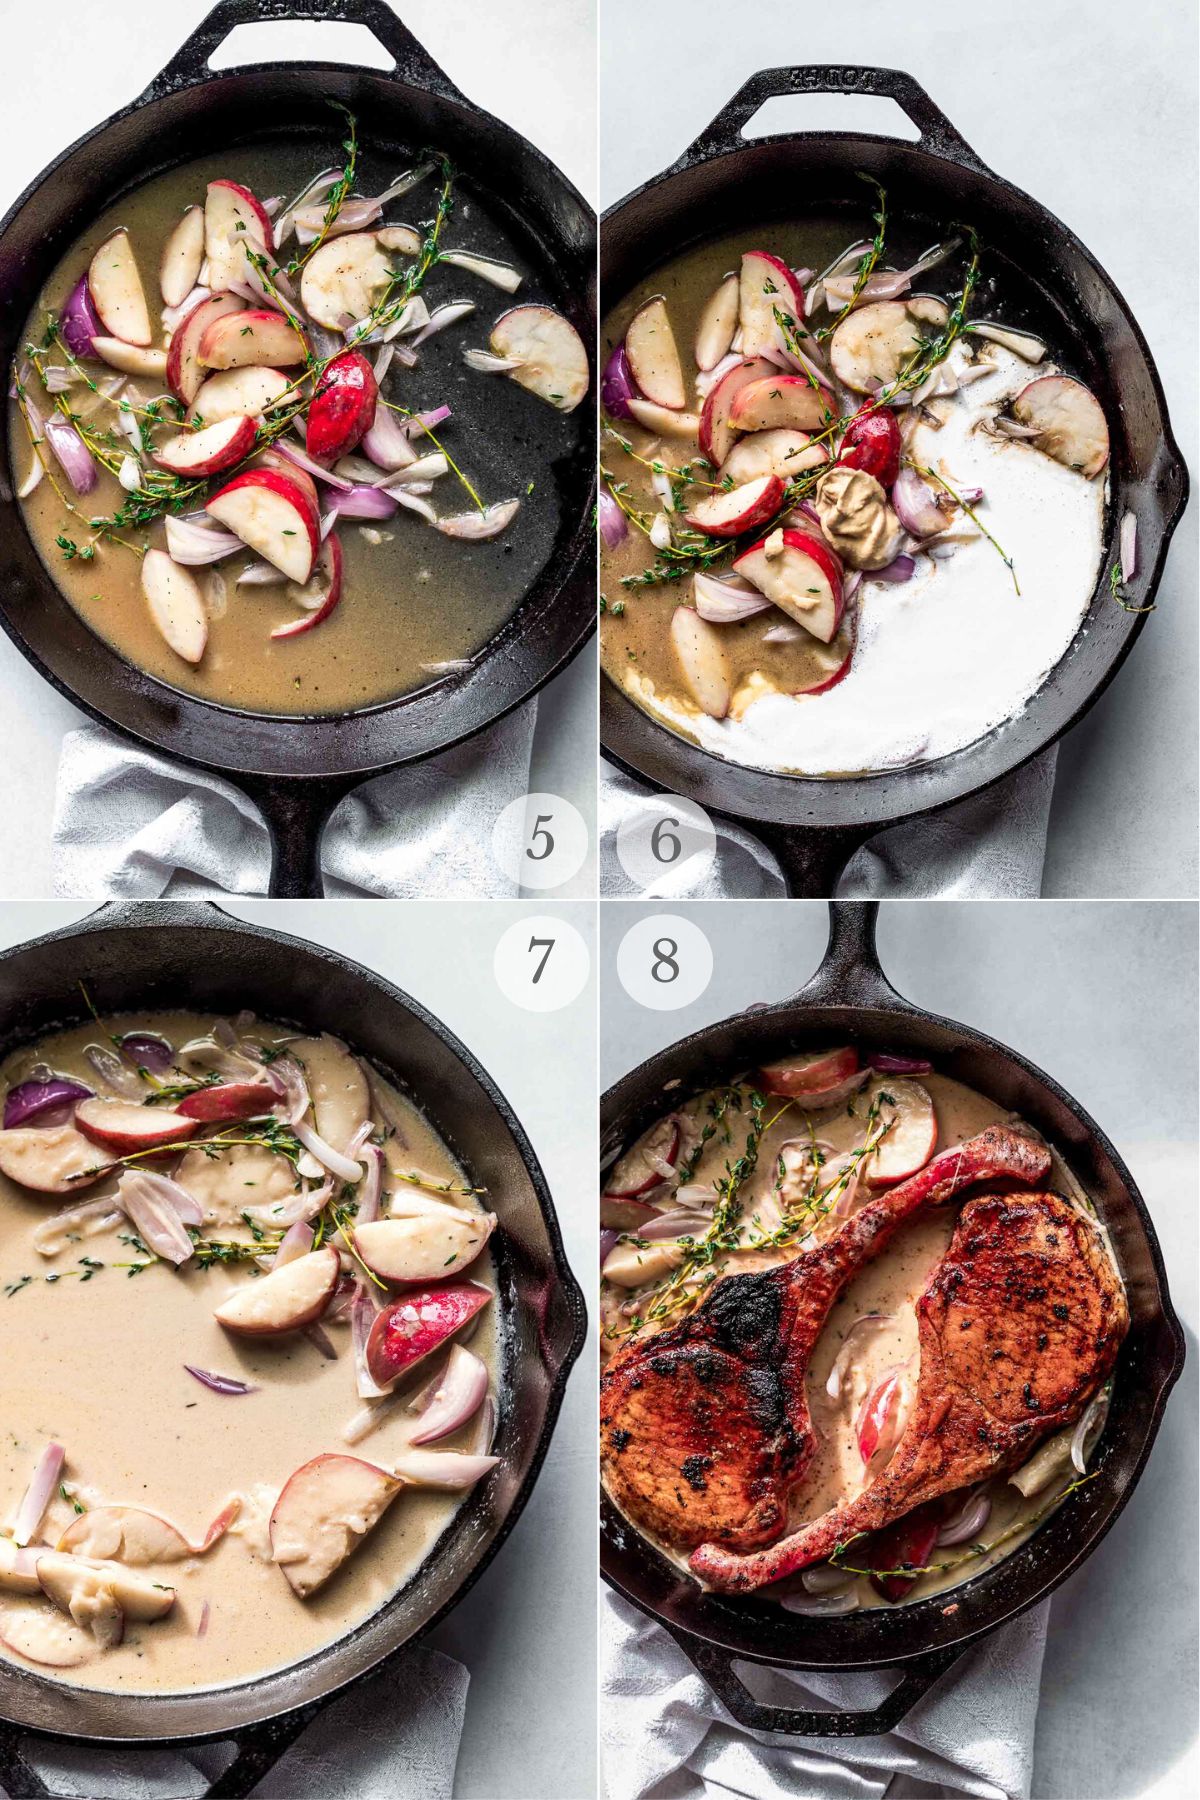 pan seared pork chops recipe steps 5-8.